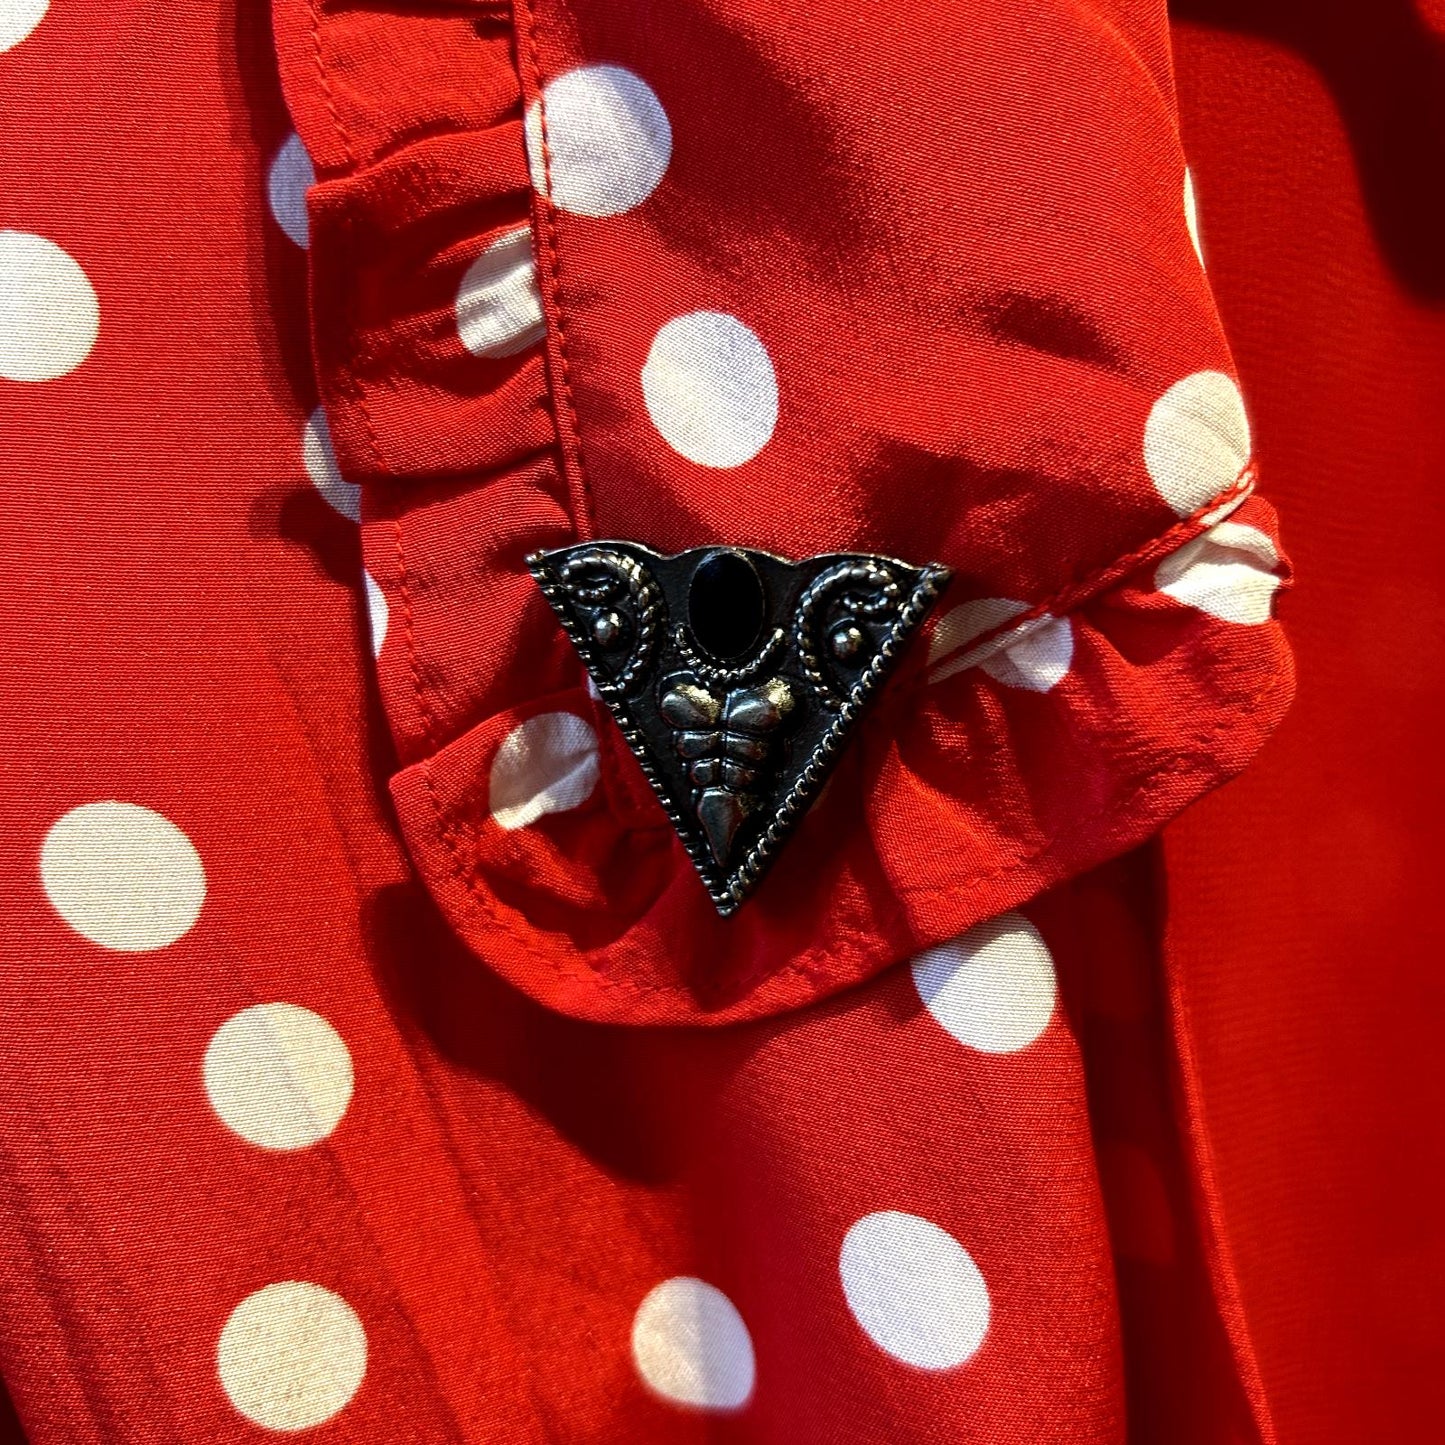 1 /S - The Kooples Red Polka Dot Magic Mushroom Embellished Collar Dress 0425GN